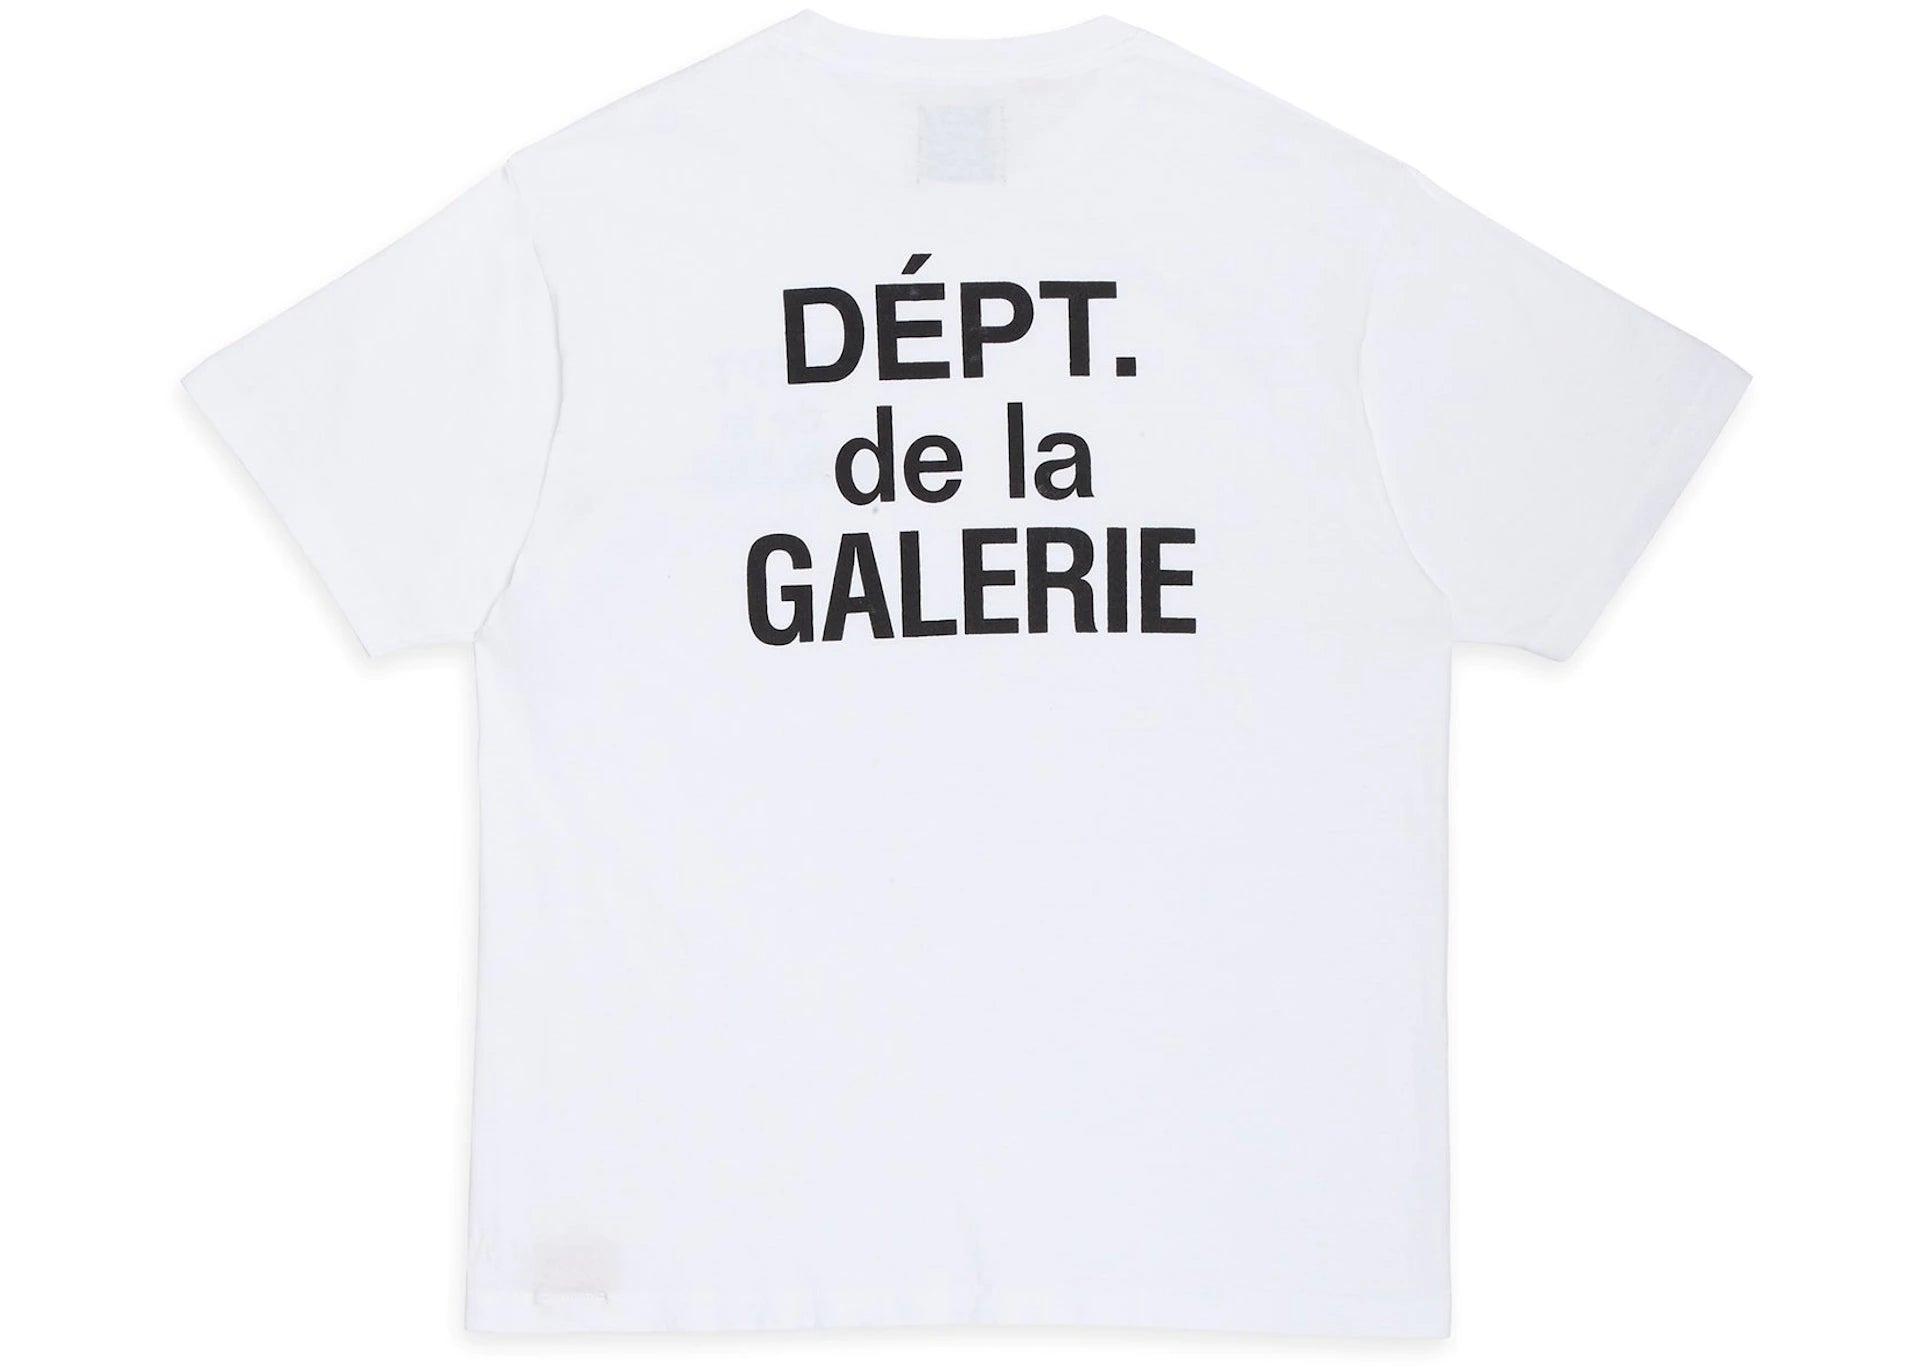 Gallery Dept. French T-shirt White/Black